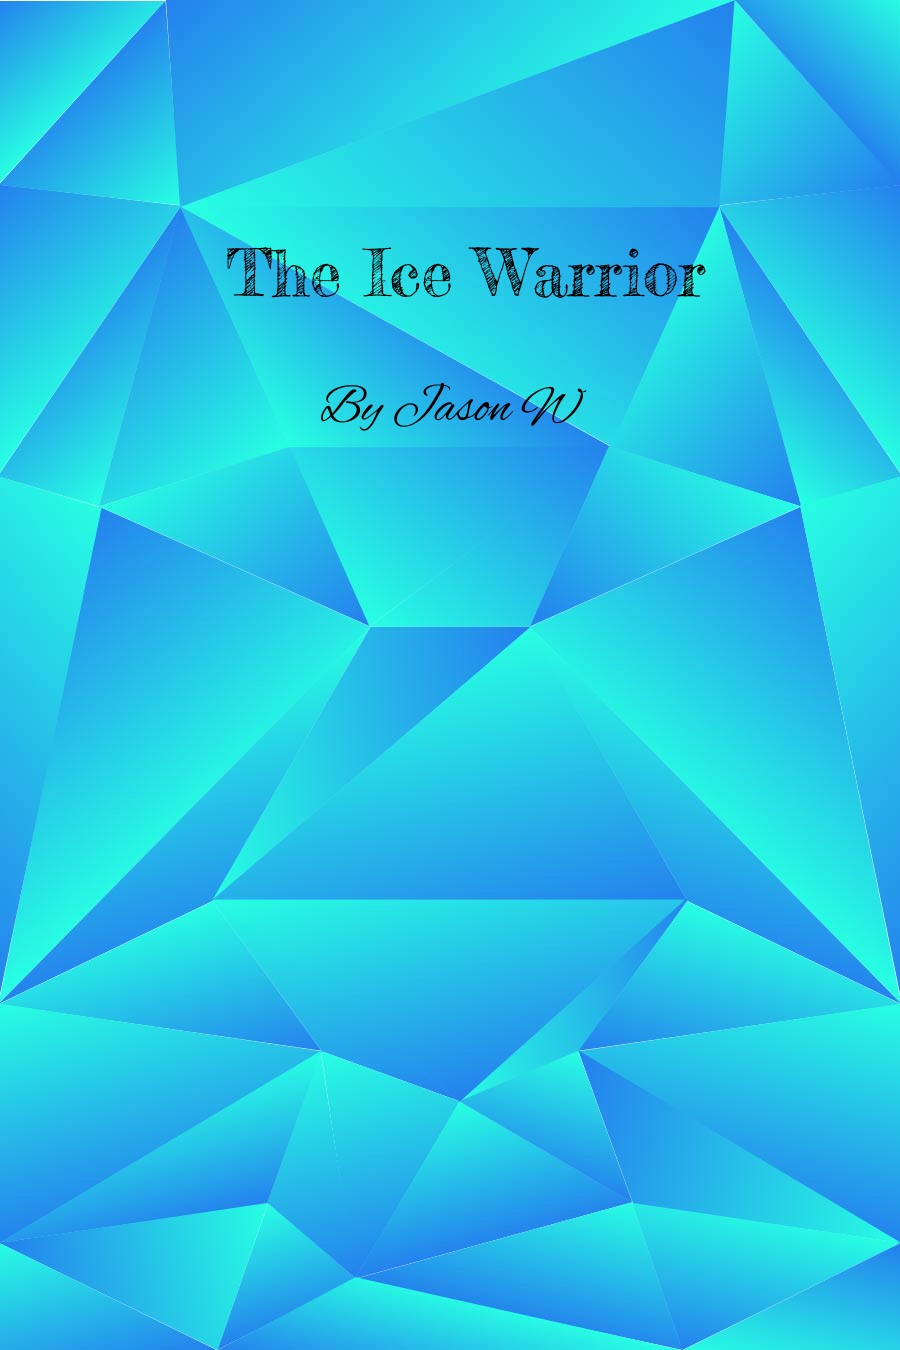 The Ice Warrior by Jason W